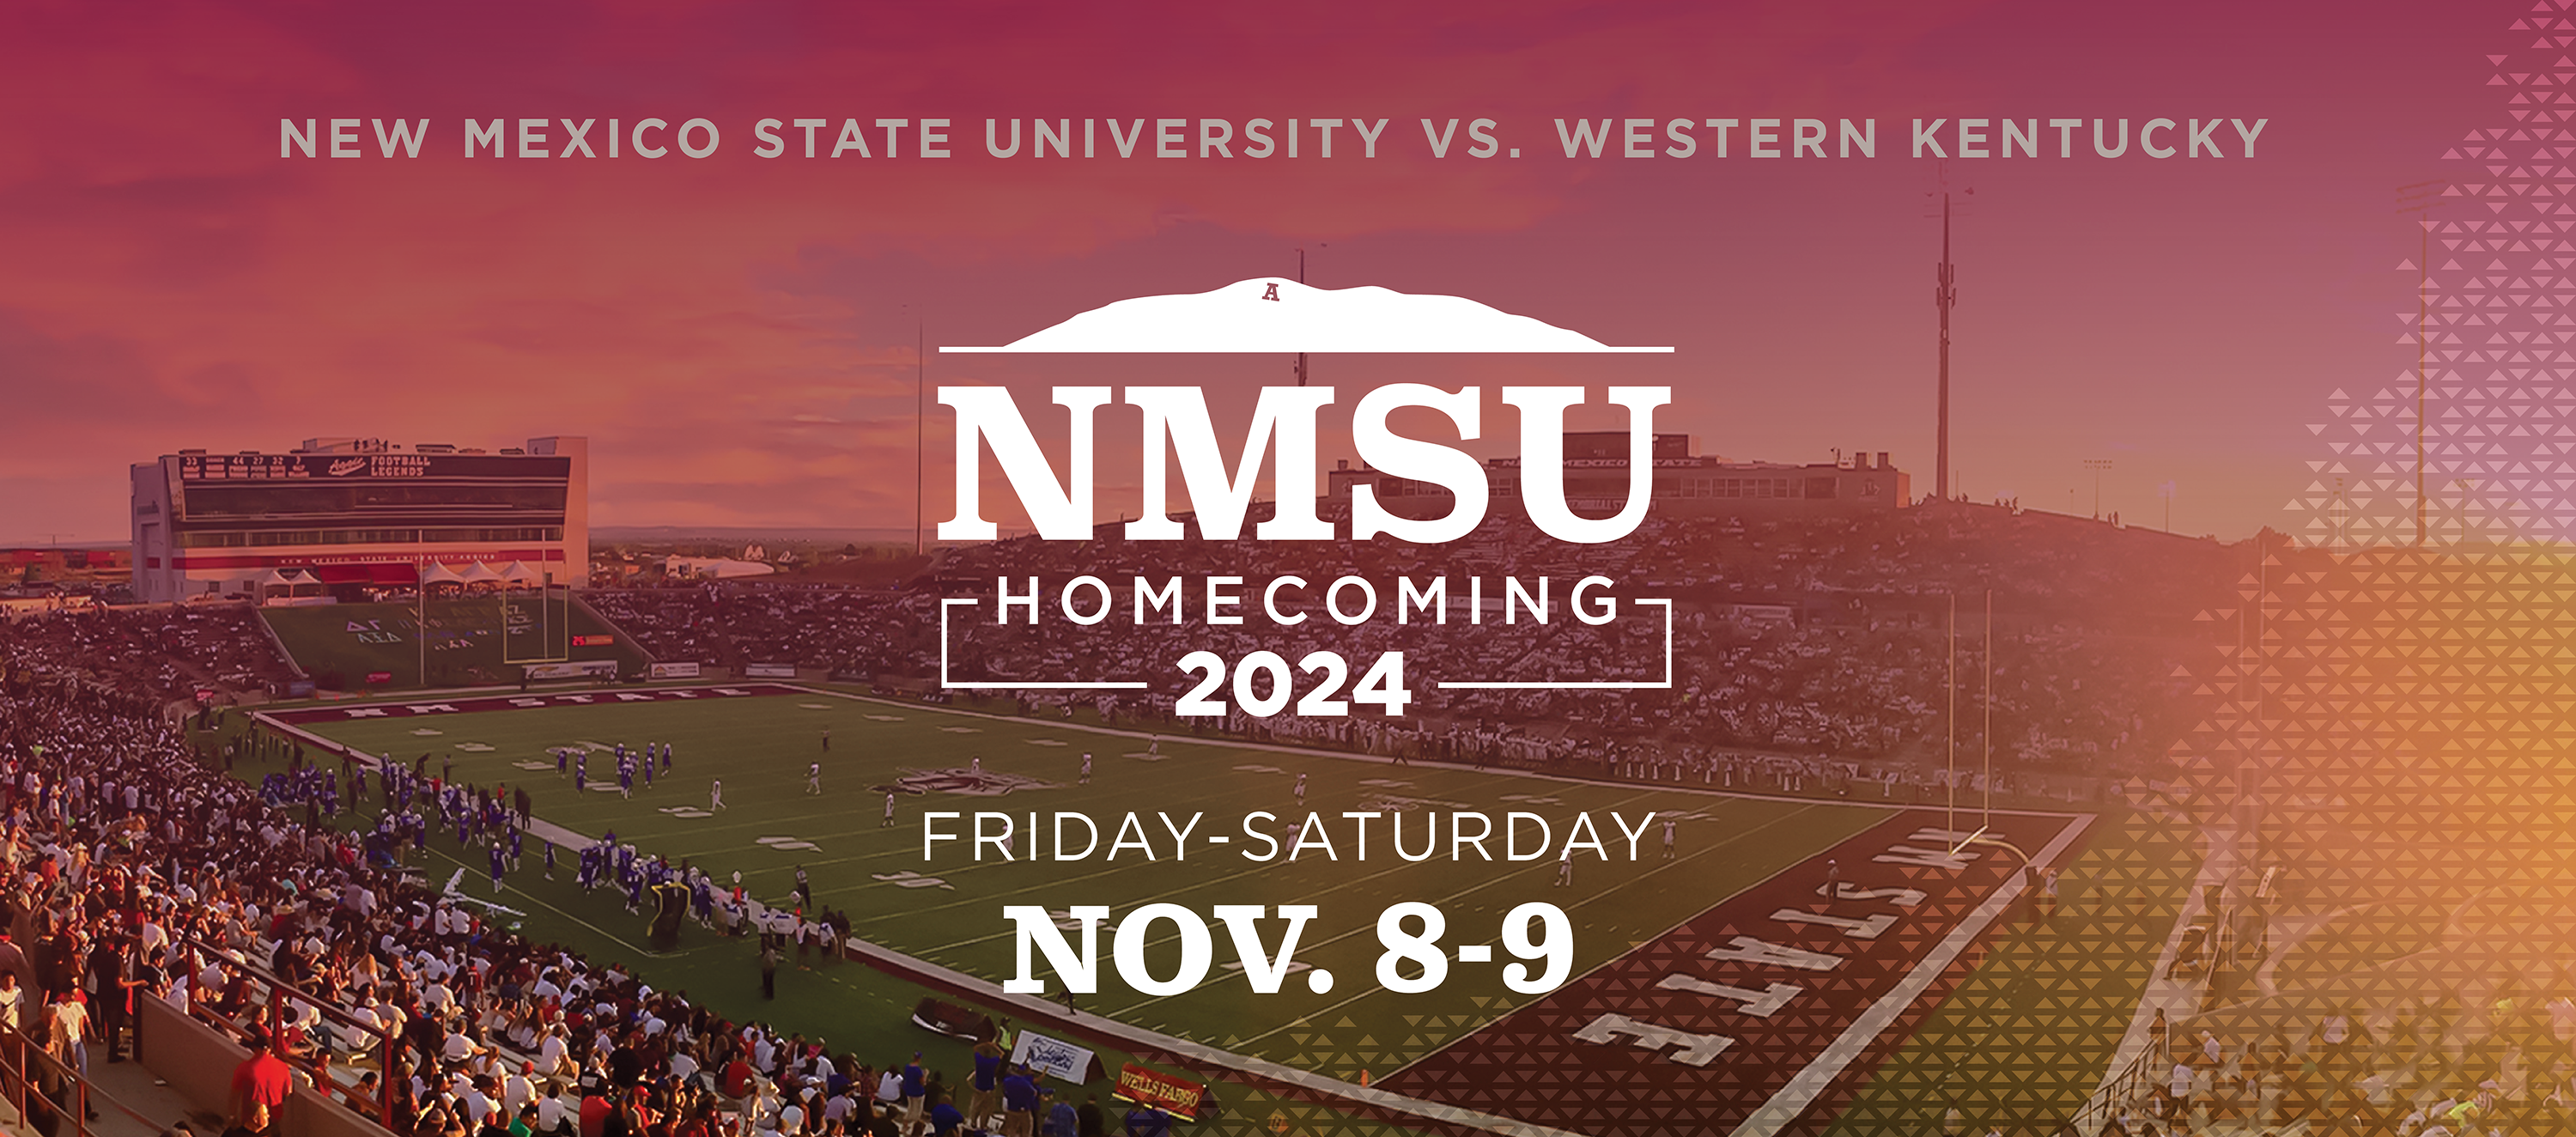 NMSU Foundation to sponsor Homecoming weekend Nov. 8-9